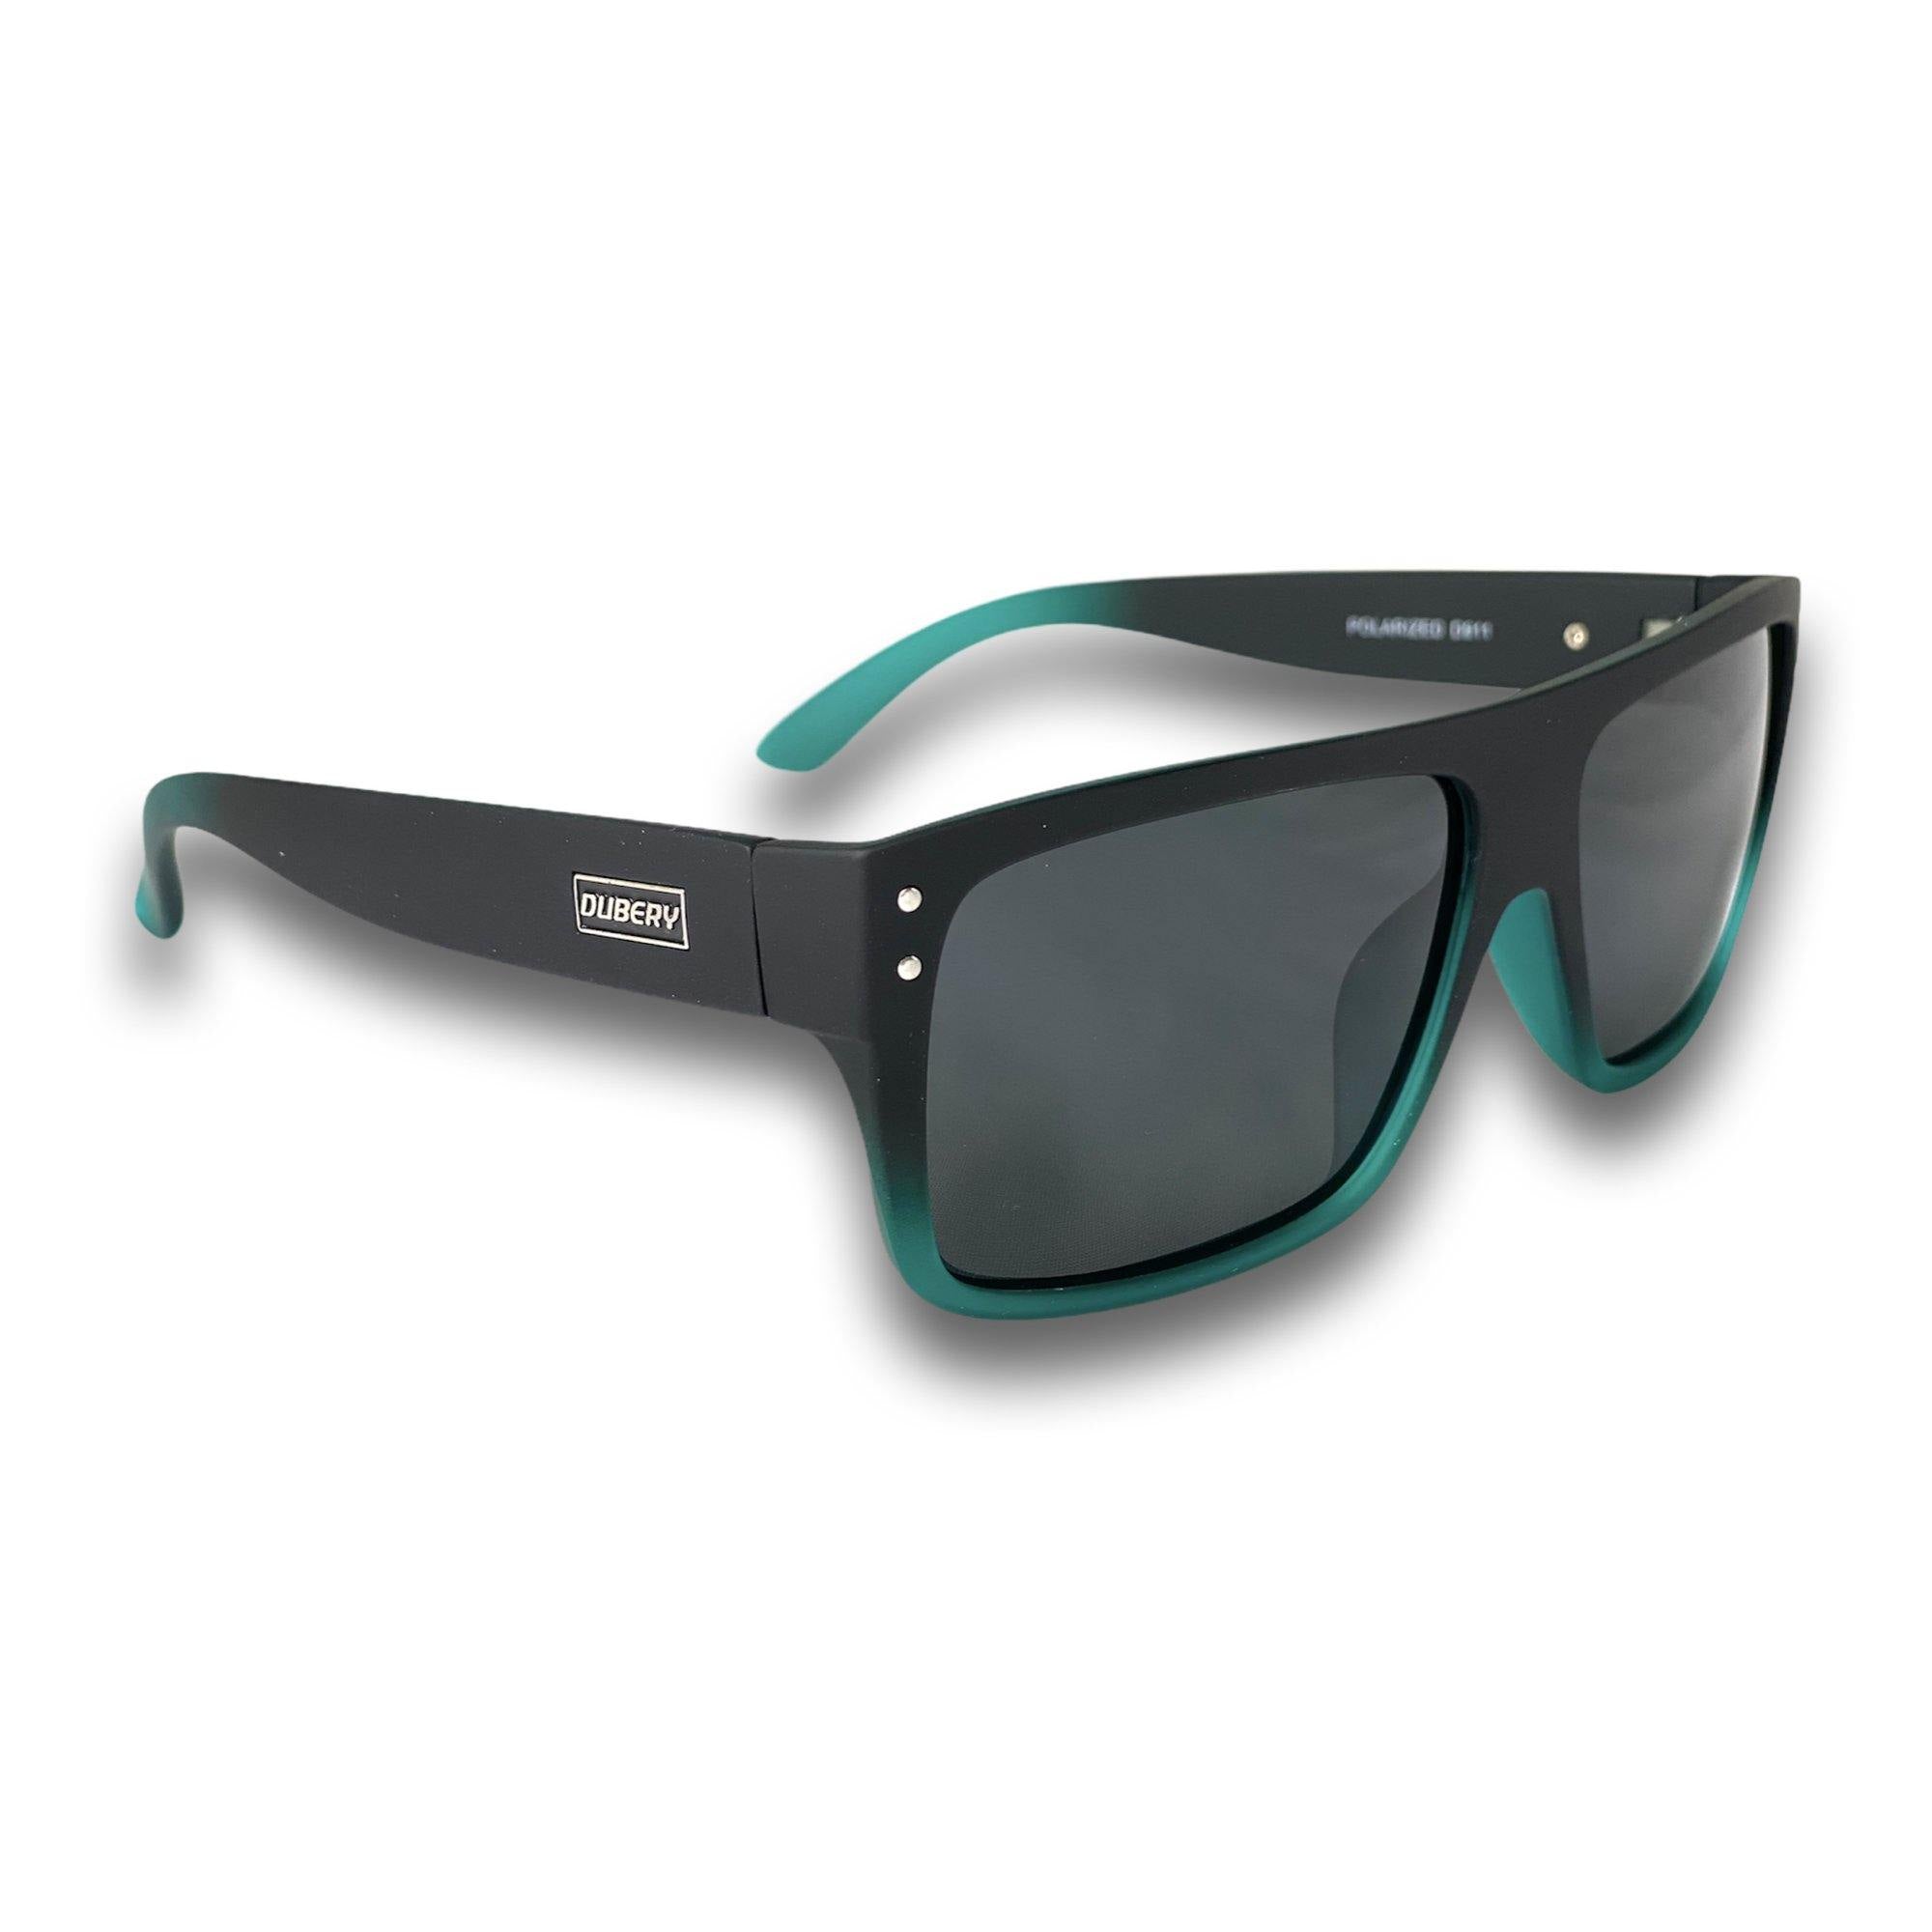 Best Cheap Polarized Sunglasses– Dubery Optics Sunglasses